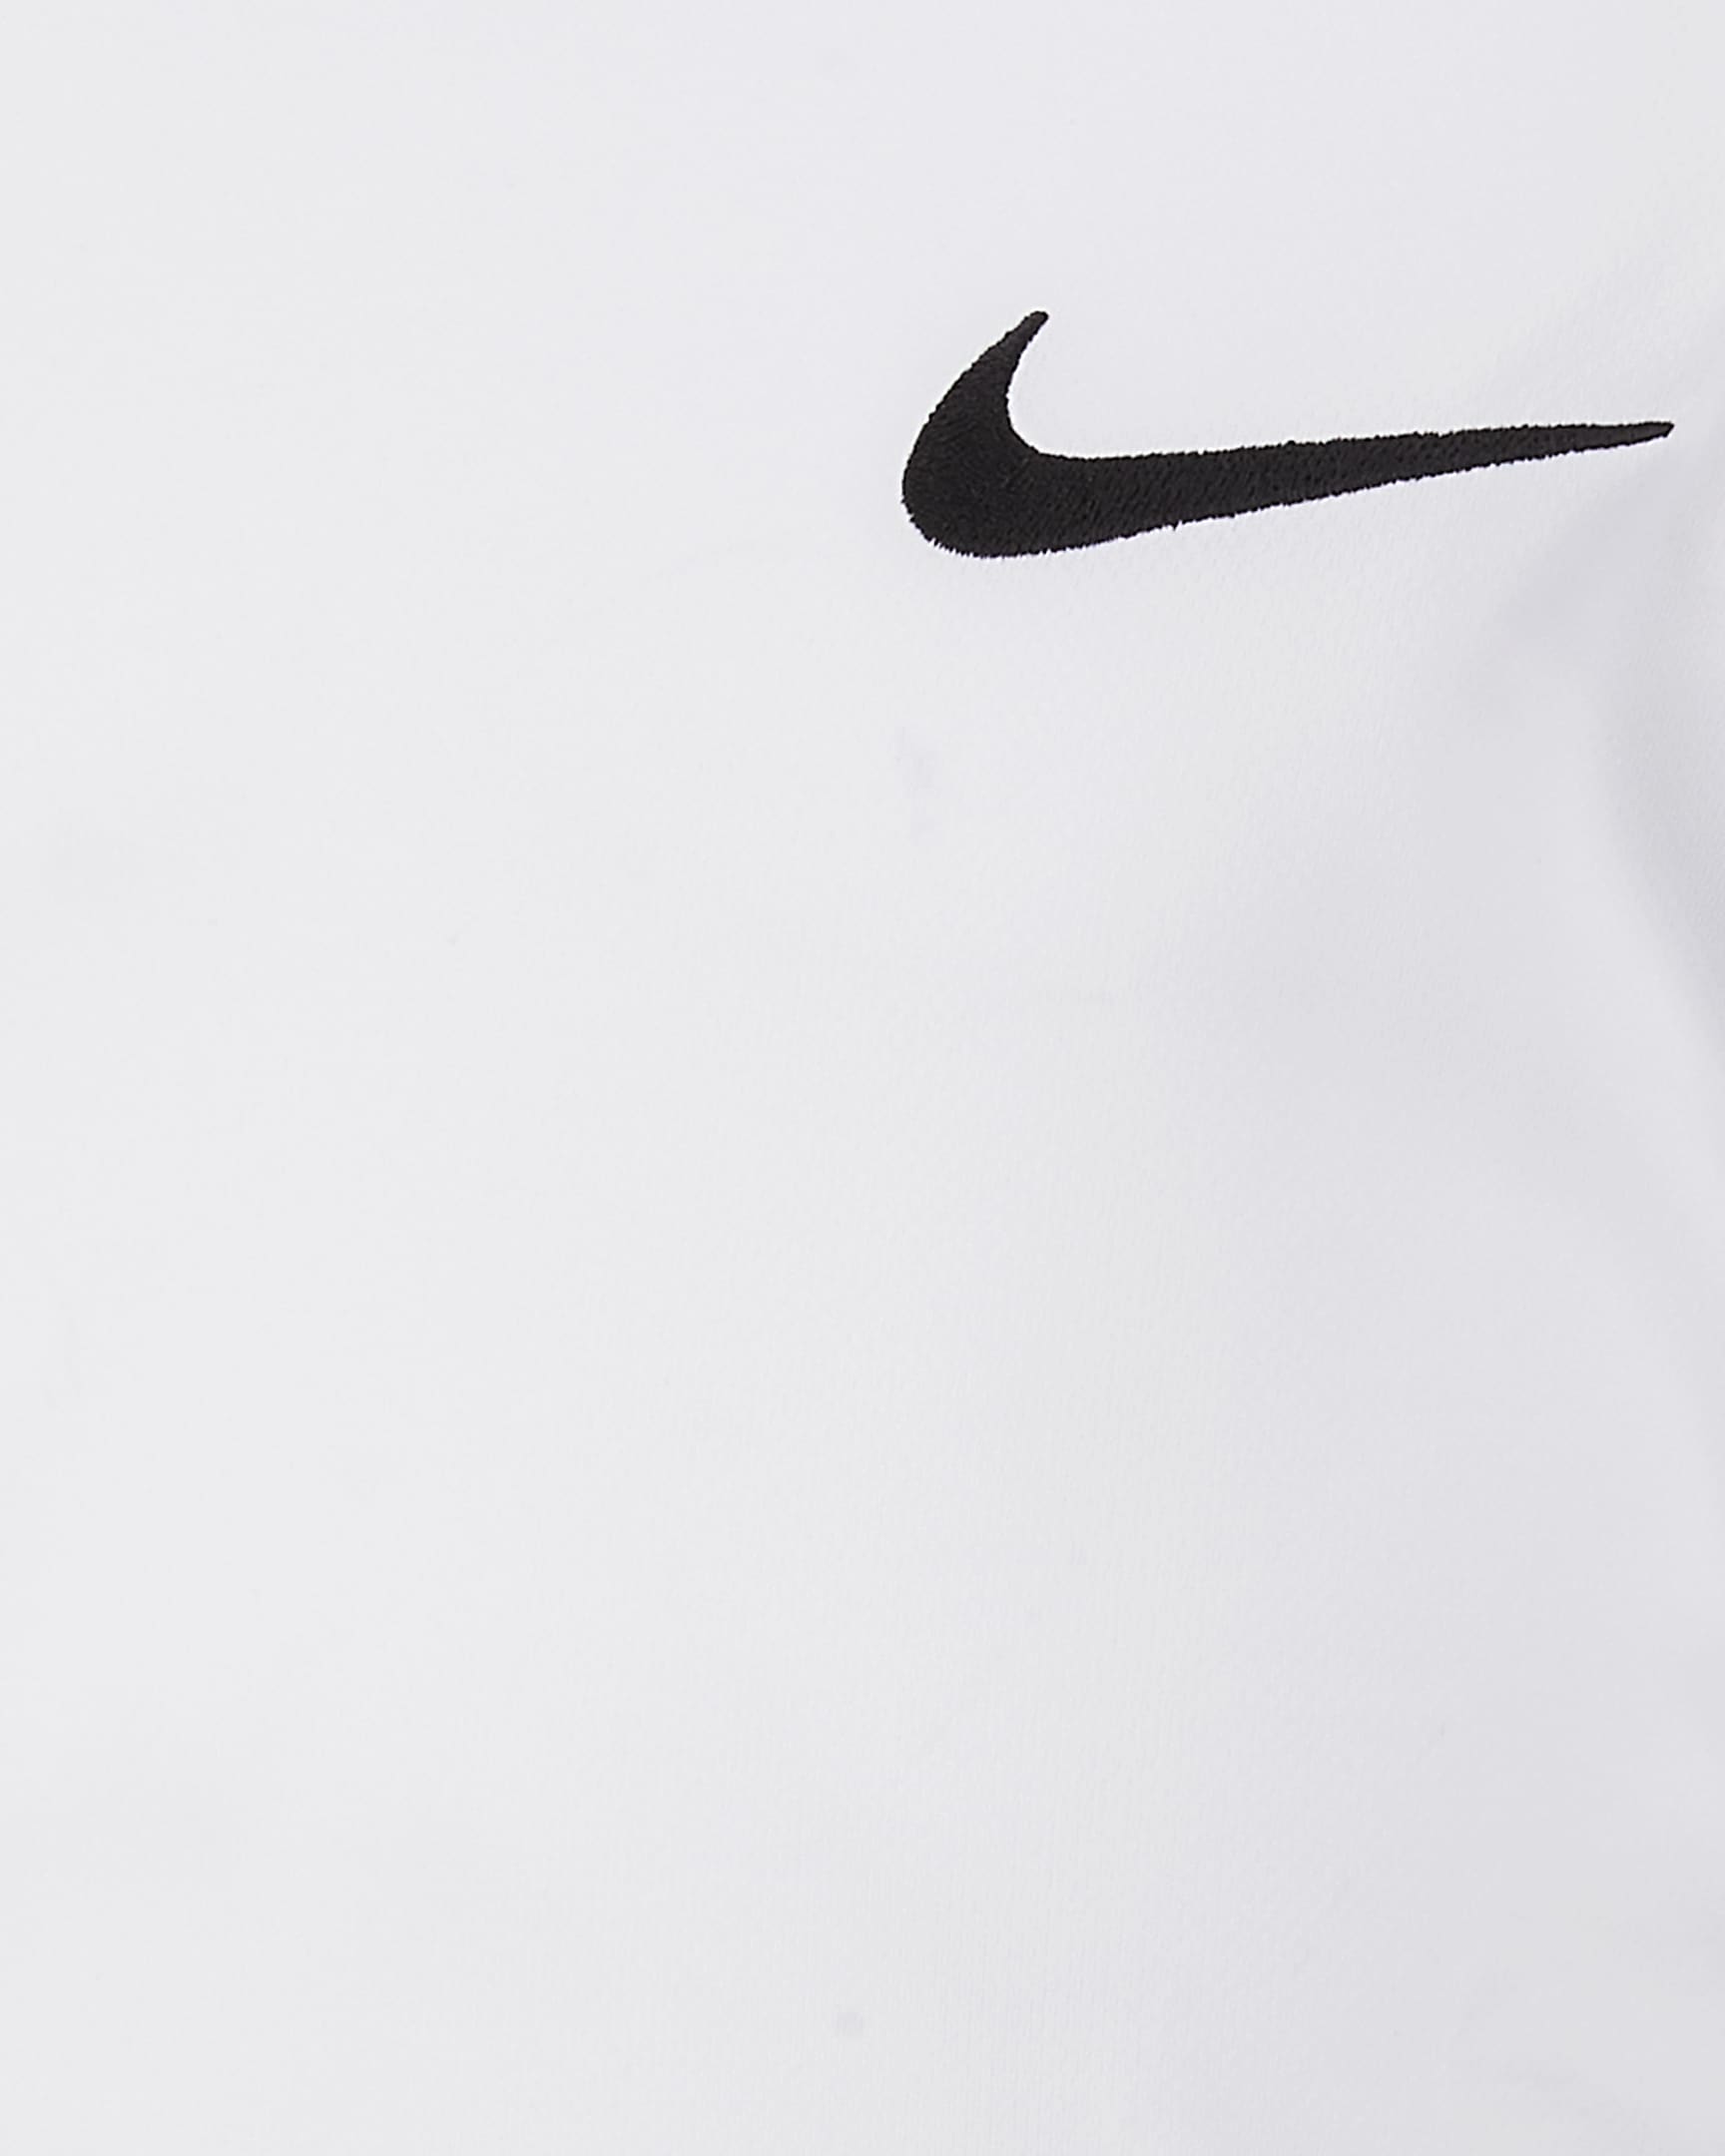 Nike Dri-FIT Older Kids' (Boys') Short-Sleeve Training Top. Nike ID